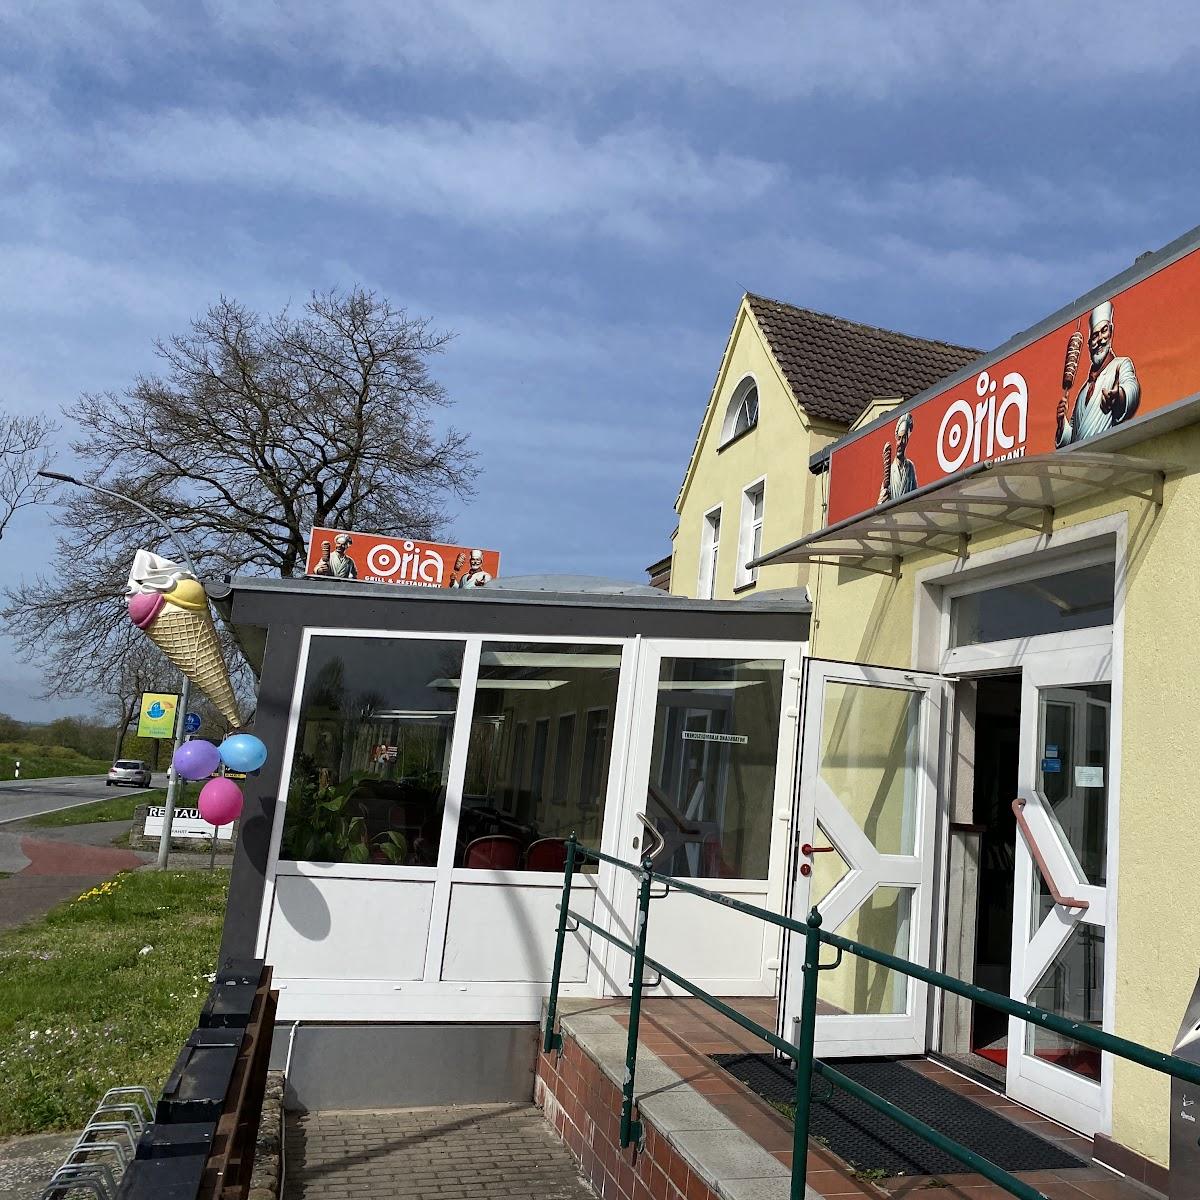 Restaurant "Oria Grill" in Lambrechtshagen